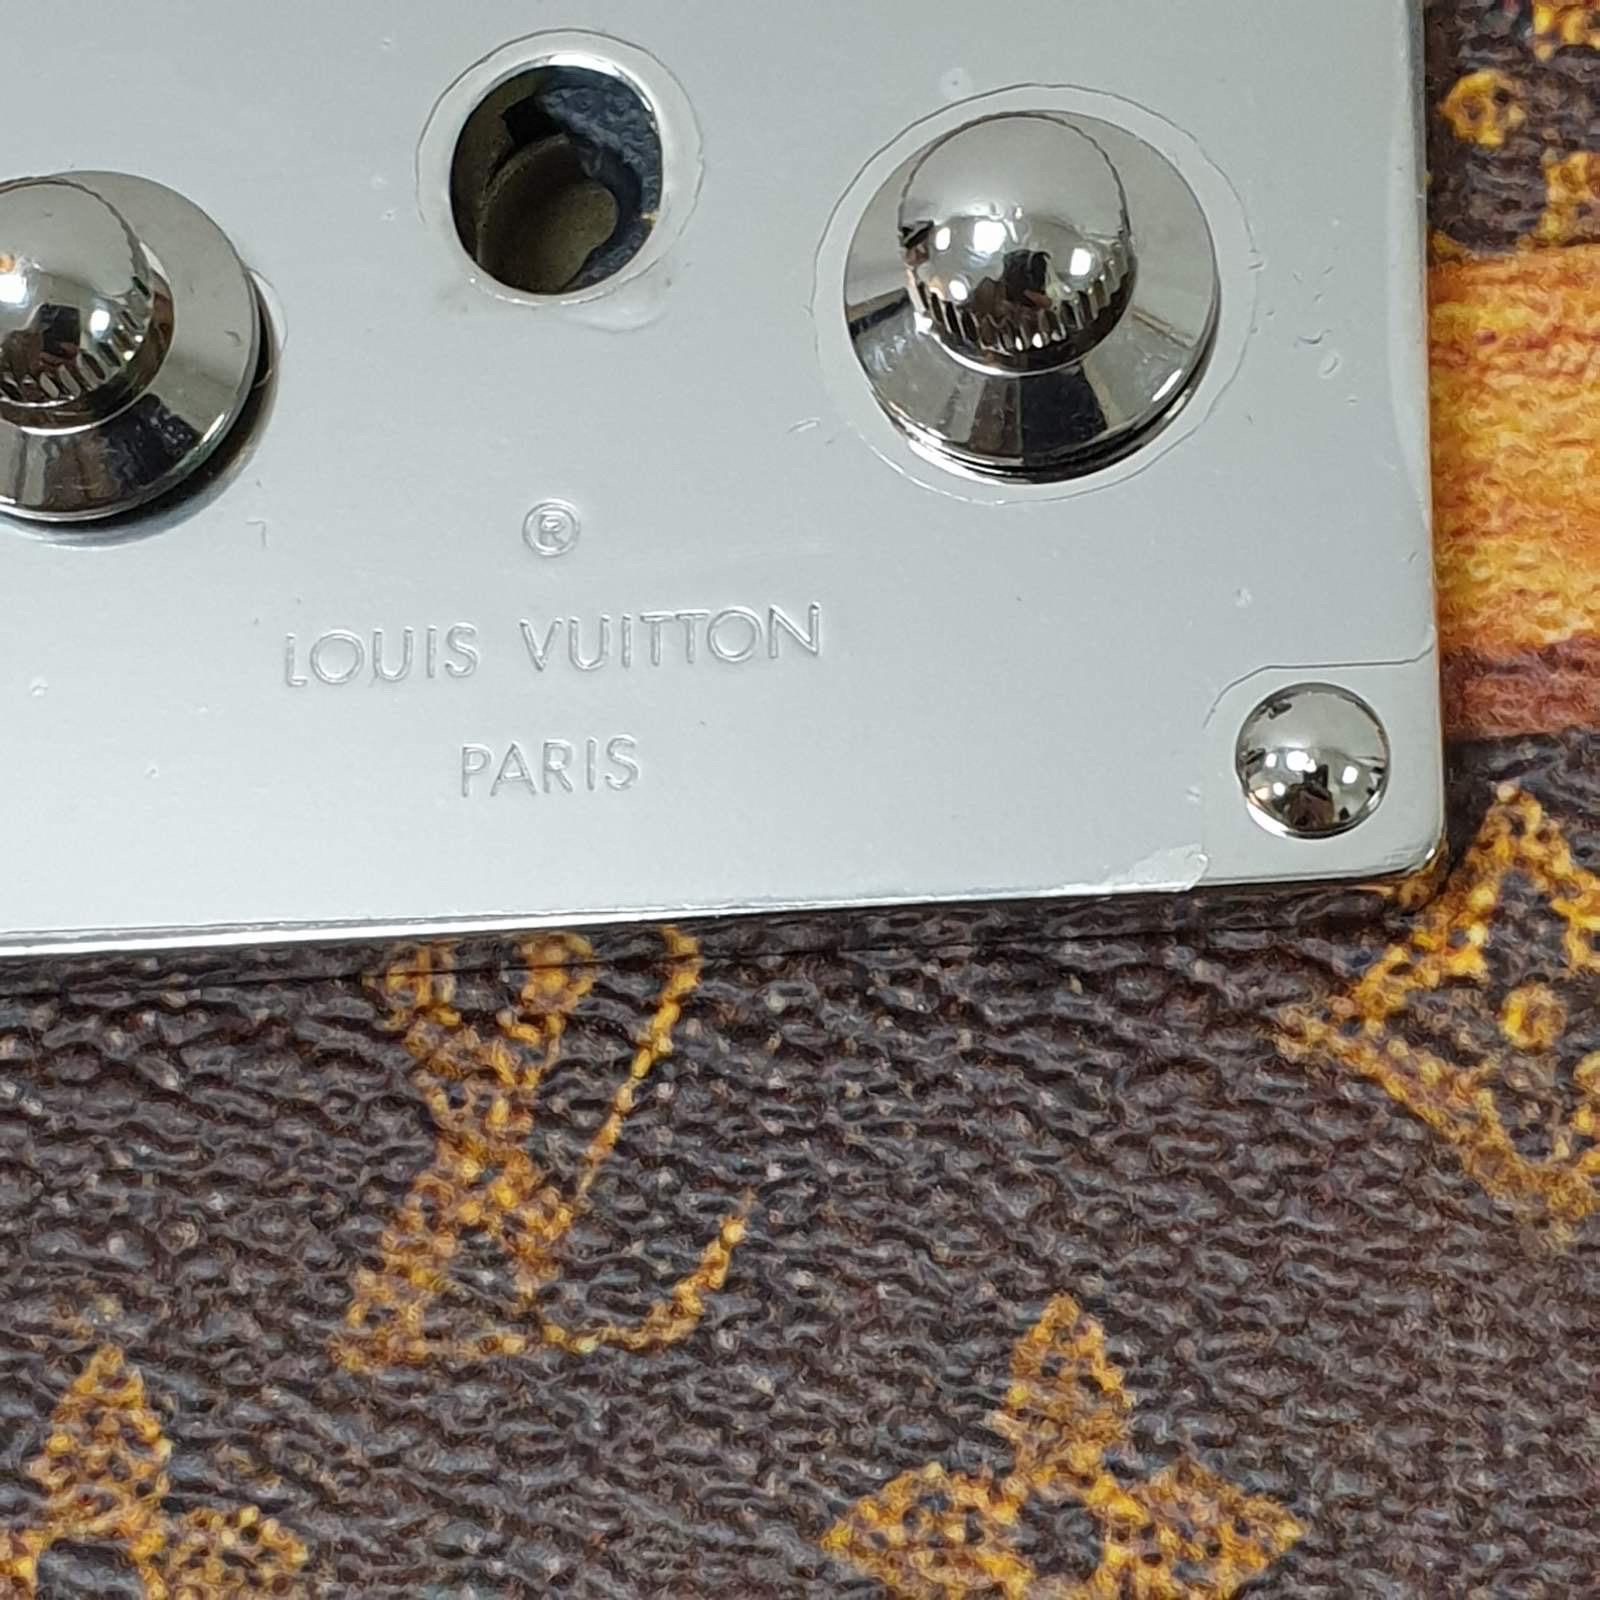 NWOB Louis Vuitton H/W 2018 Trunk Petite Malle Tasche 4